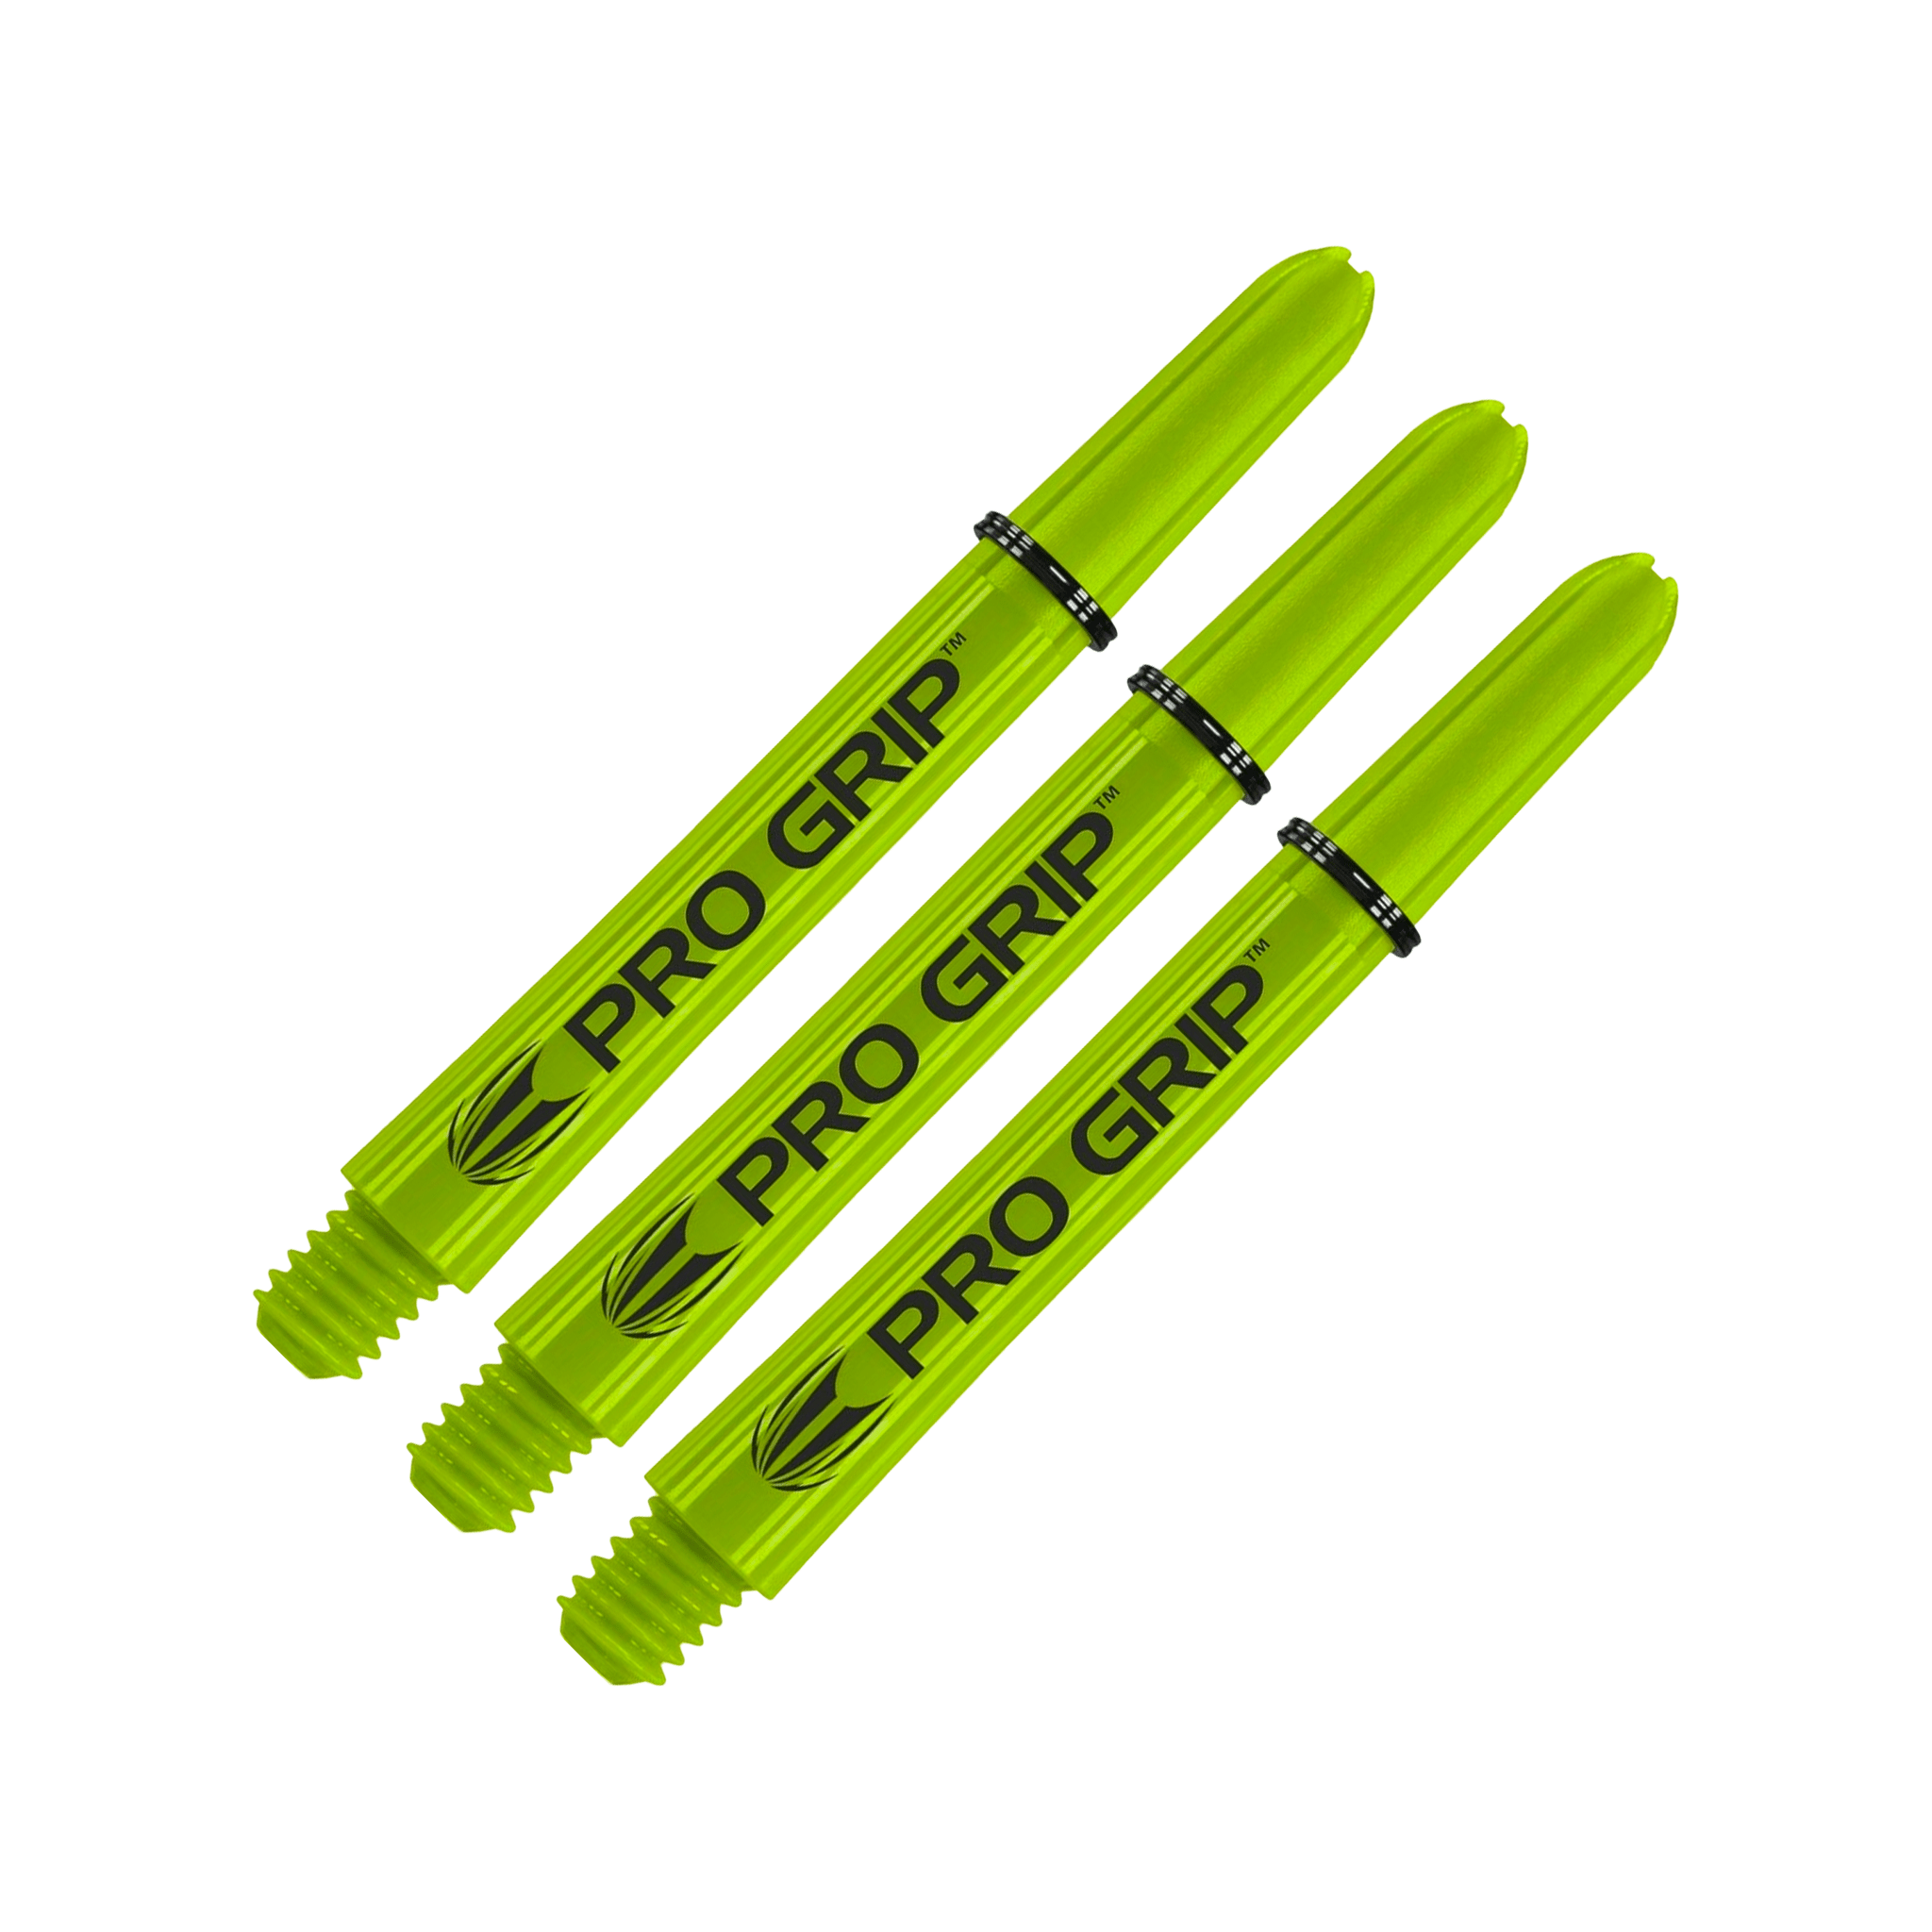 Target Pro Grip Multi Pack - Nylon Dart Shafts (3 Sets) Lime / Intermediate (41mm) Shafts